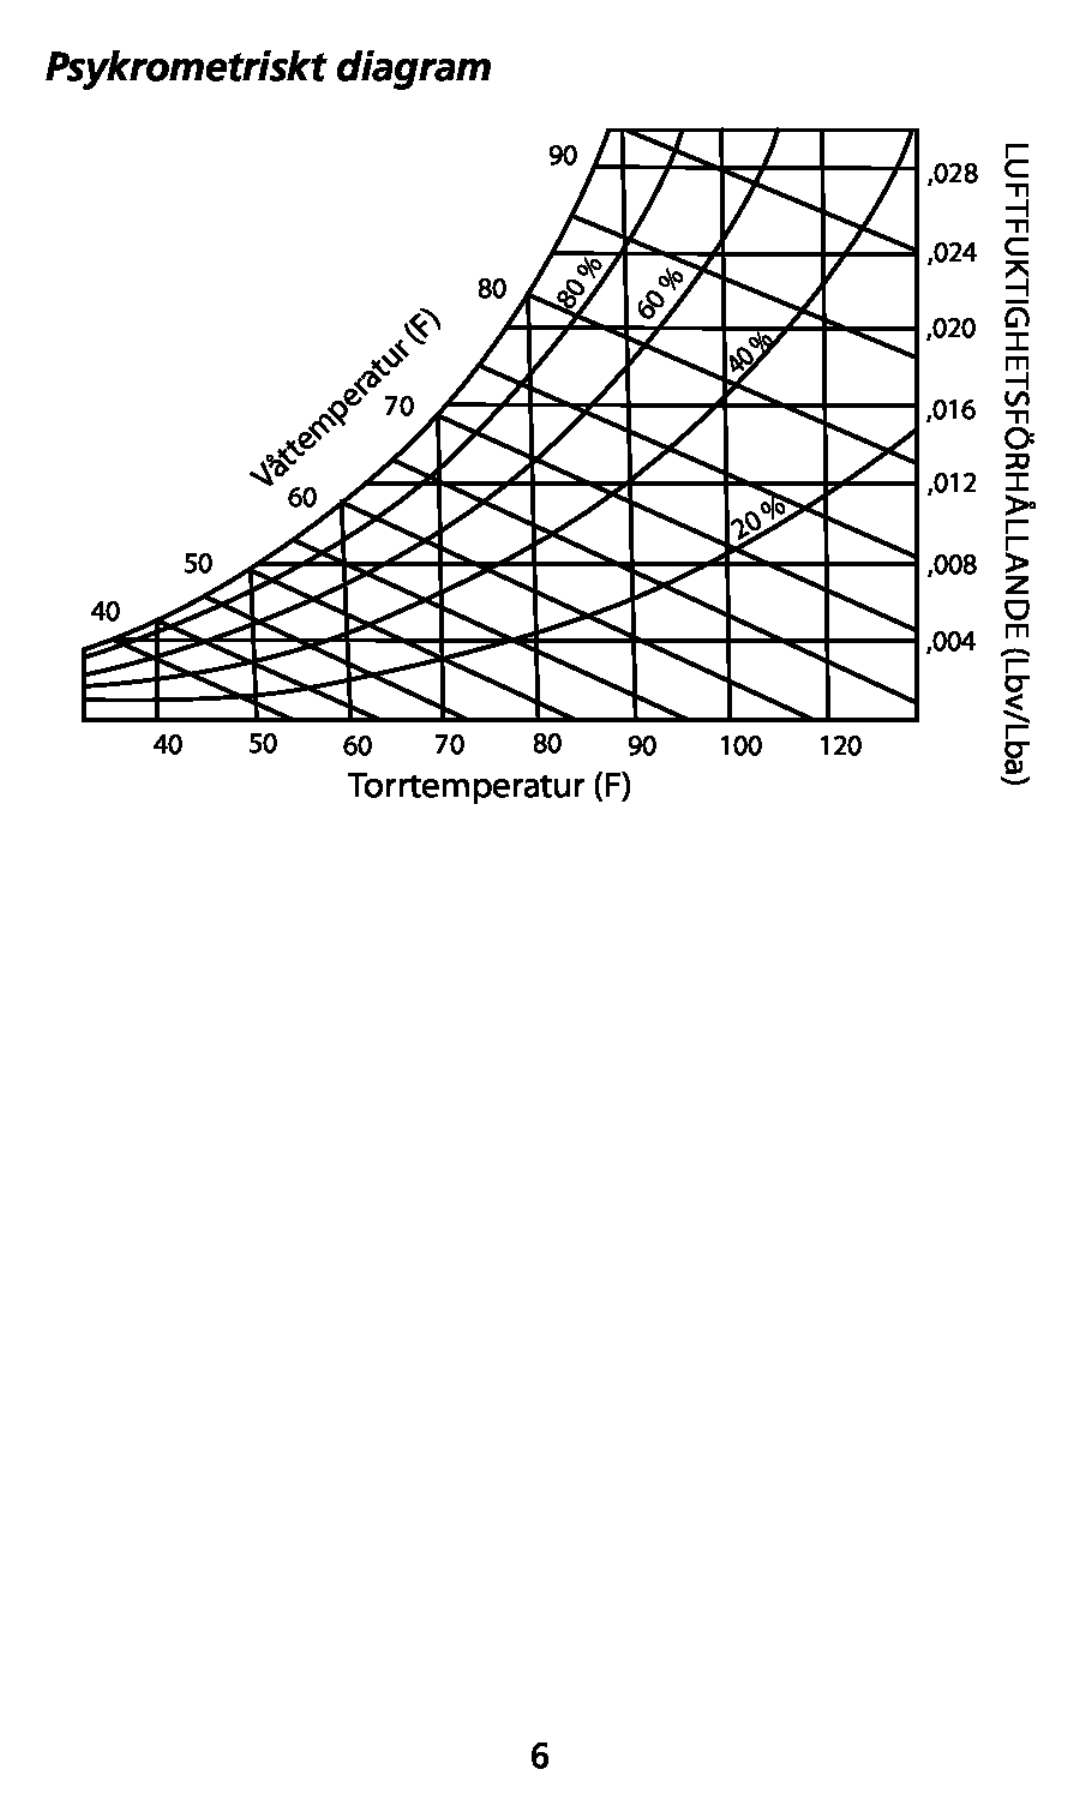 Ampro Corporation TH-3, THWD-3 user manual Psykrometriskt diagram, 5PSSUFNQFSBUVS, 656,5*&54¸3ª--/% 